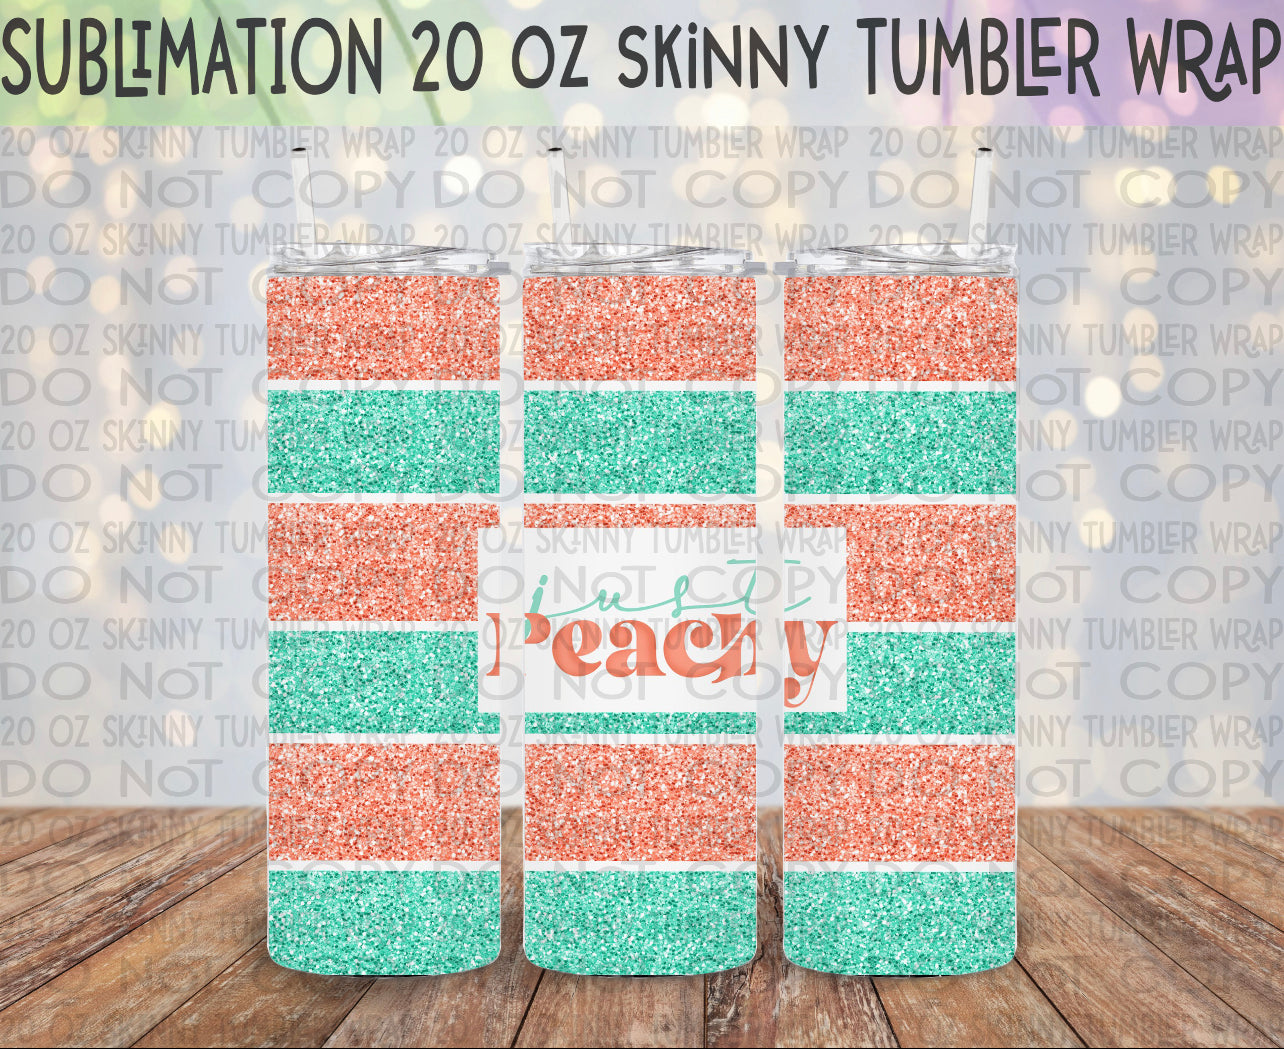 Just Peachy 20 Oz Skinny Tumbler Wrap - Sublimation Transfer - RTS